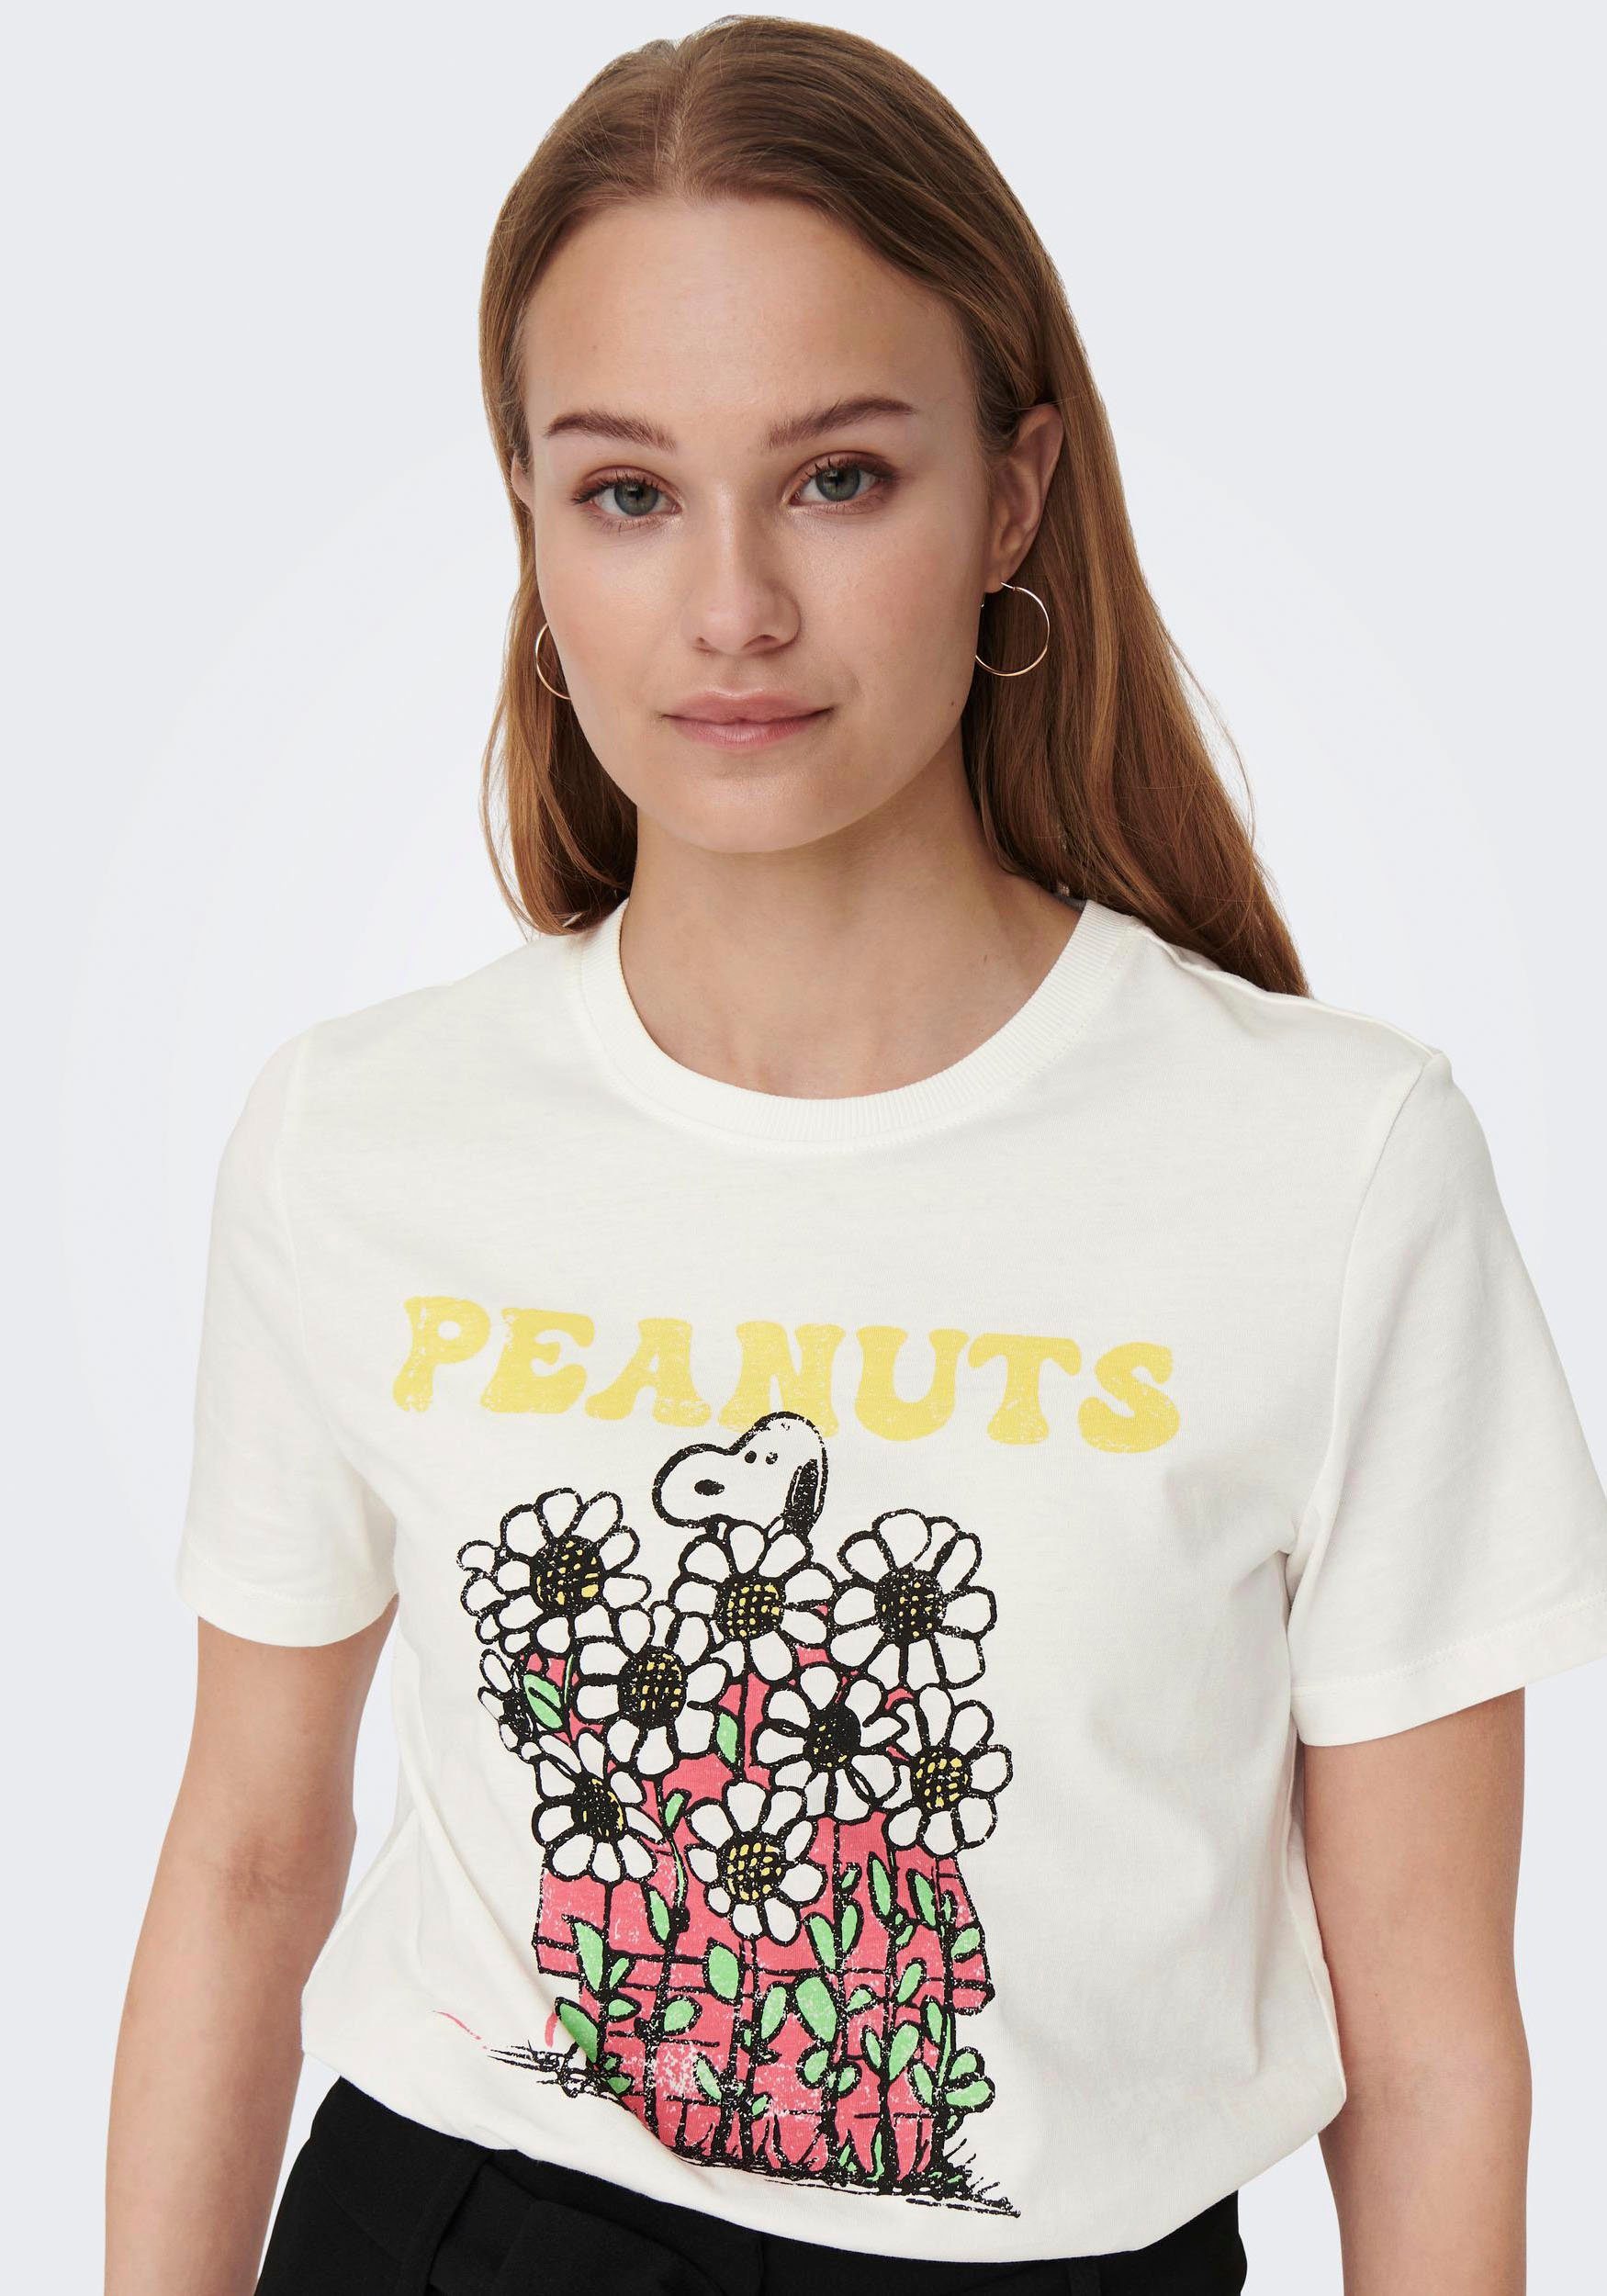 TOP ONLPEANUTS BOX Kurzarmshirt REG Print:Sunflowers JRS Snoopy ONLY Dancer Cloud S/S Prints unterschiedliche FLOWER